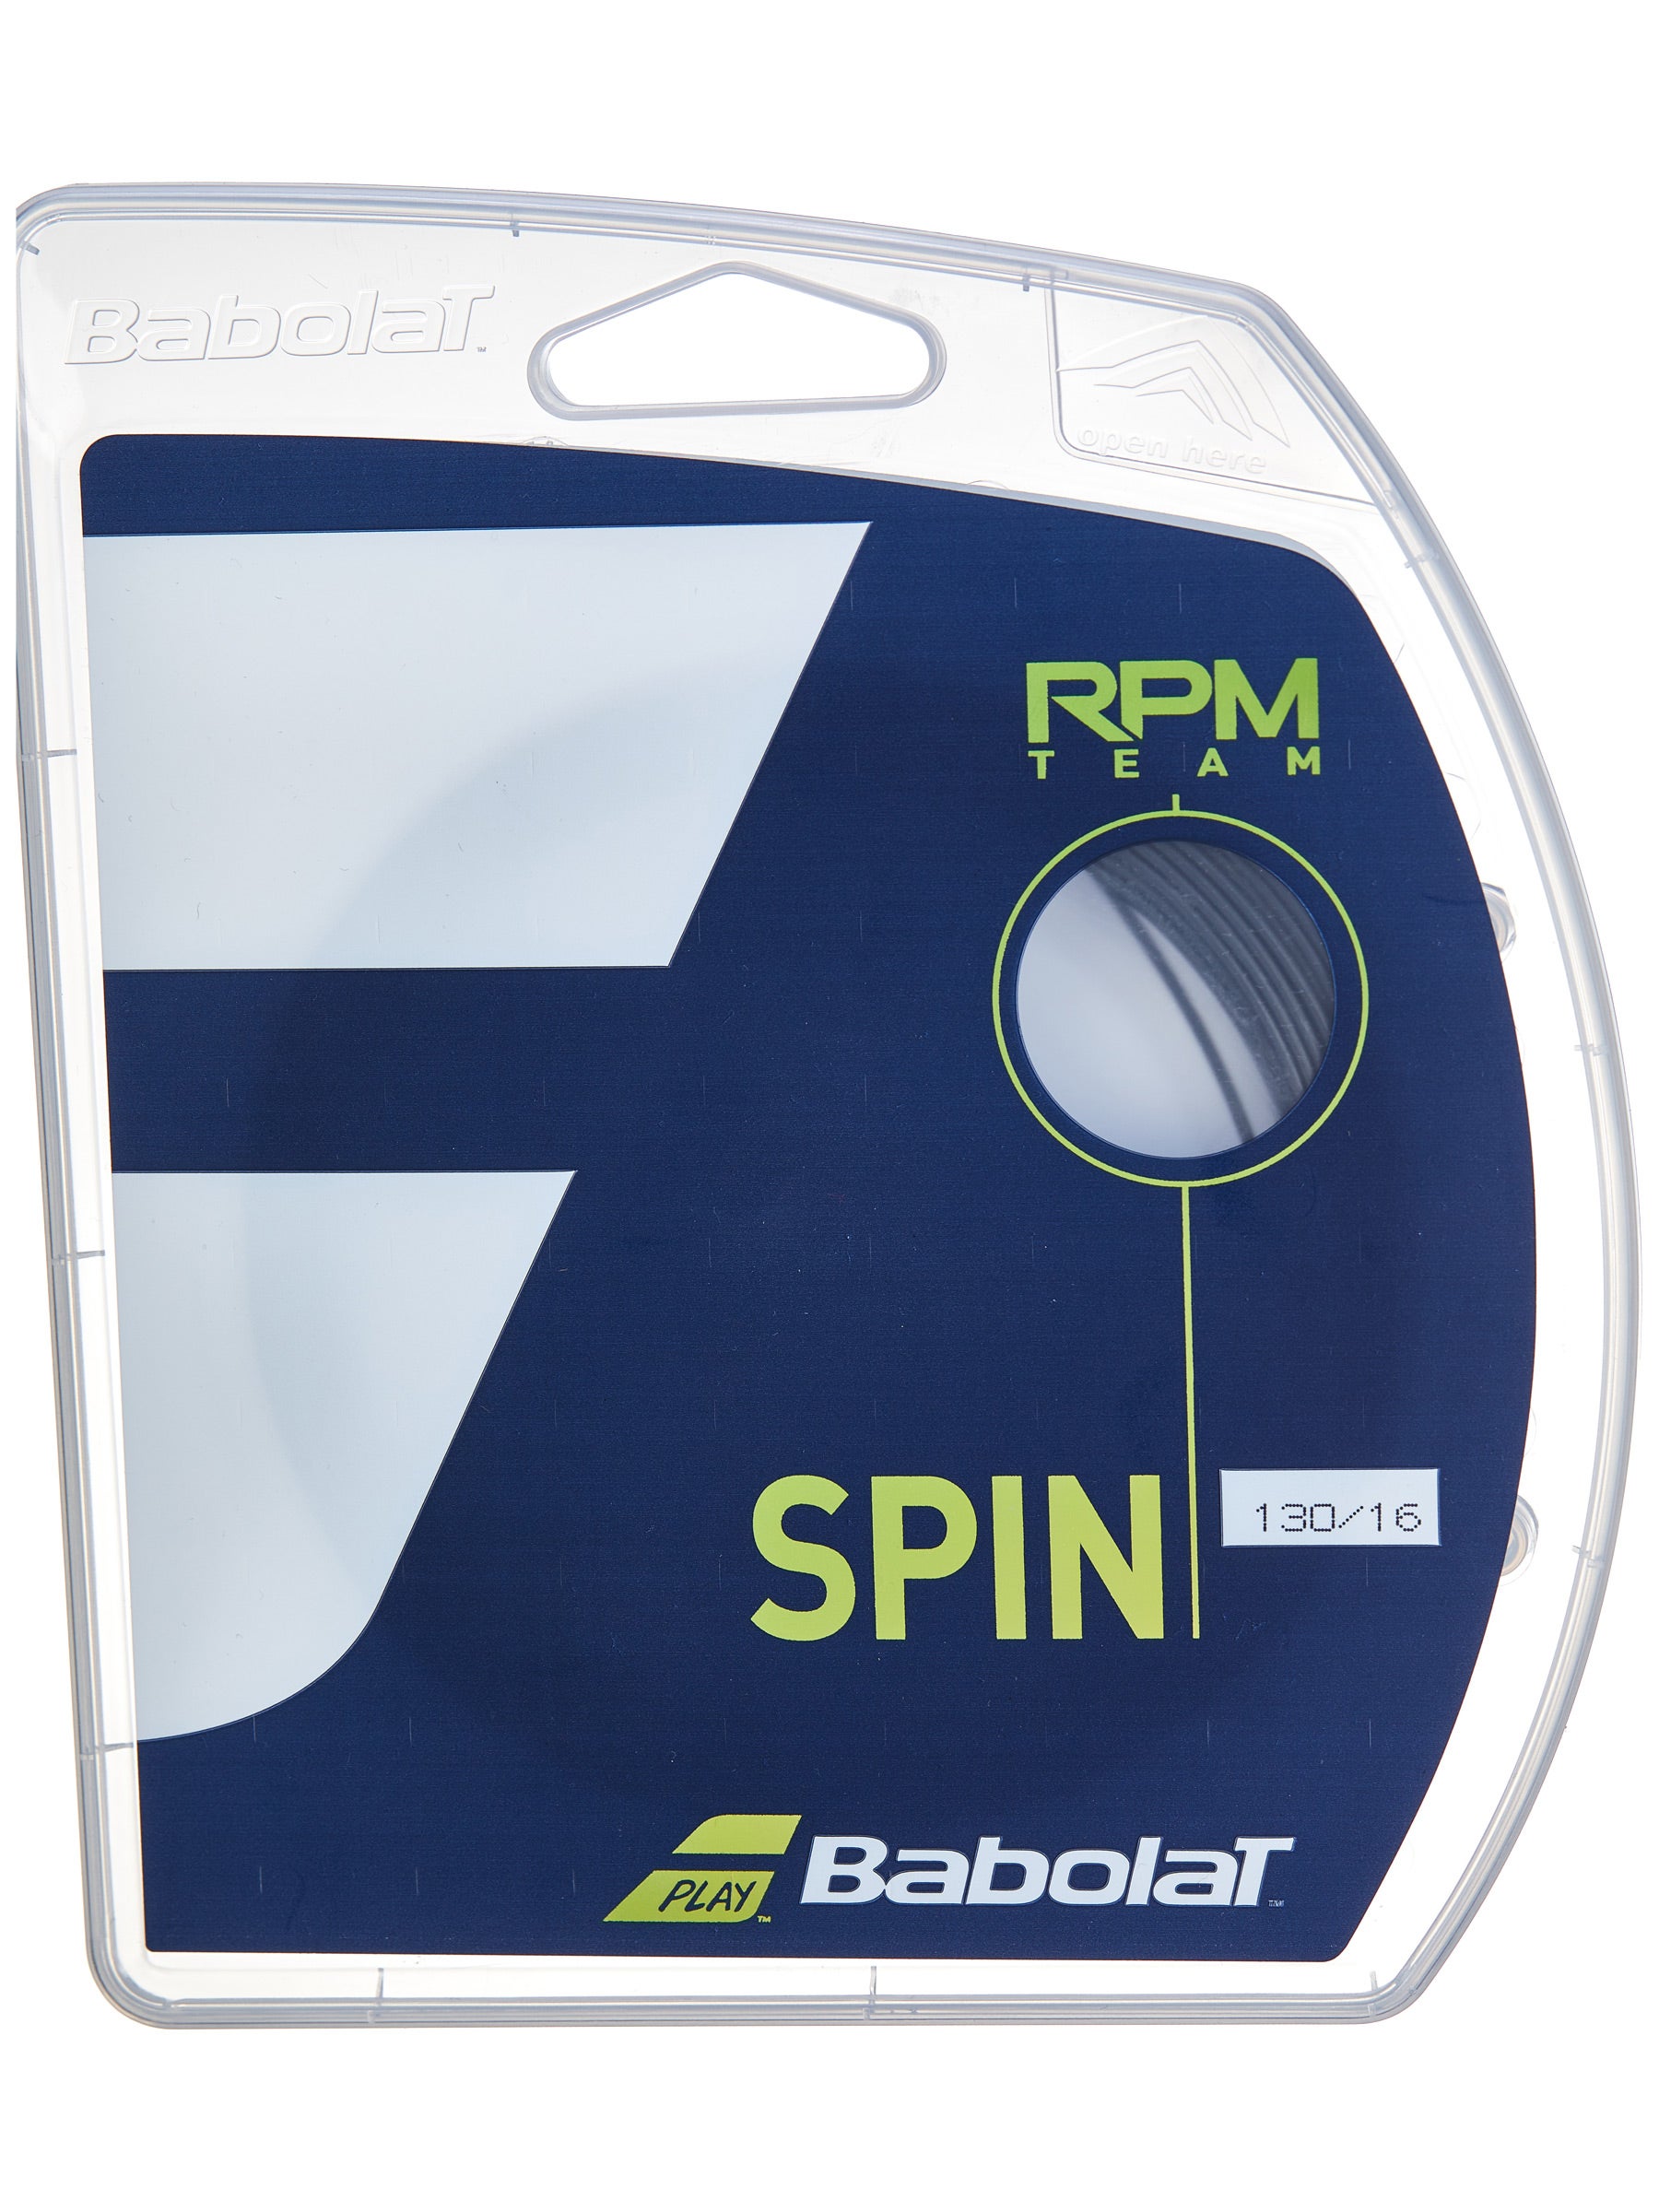 Black Babolat New BabolaT RPM TEAM 130/16 Gauge 12M Set Tennis String 